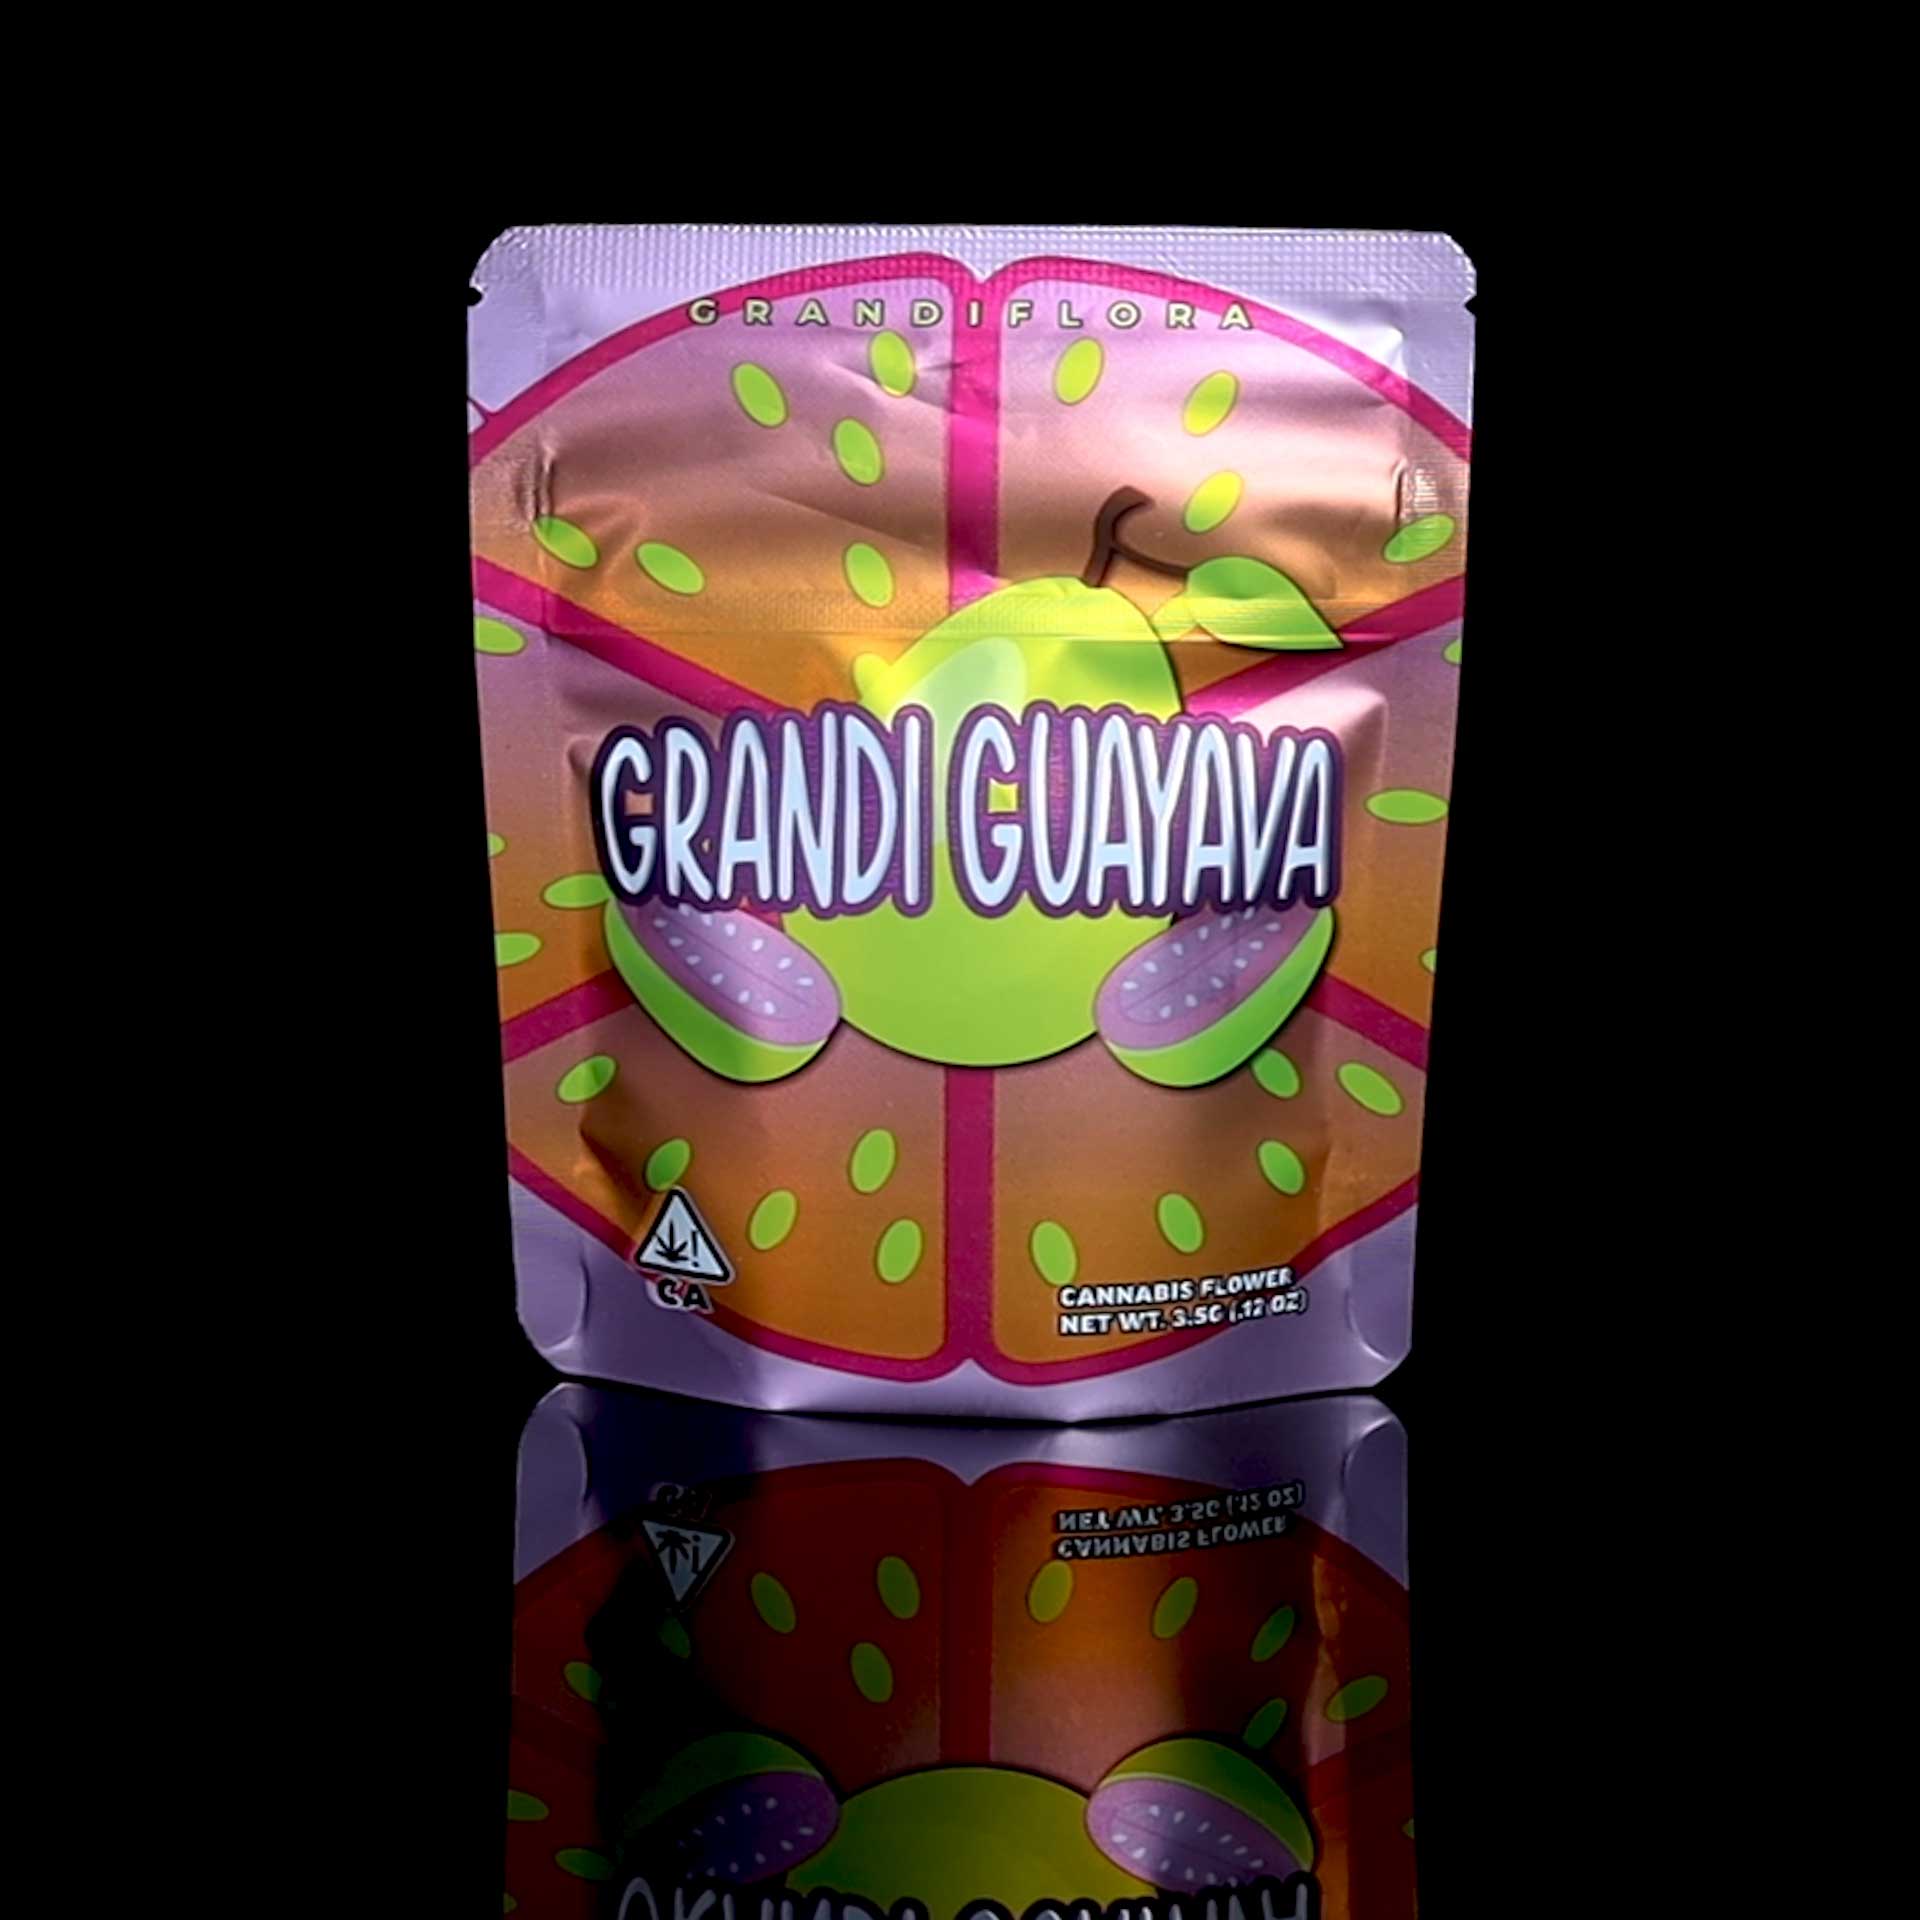 Grandi Guayava by GrandiFlora